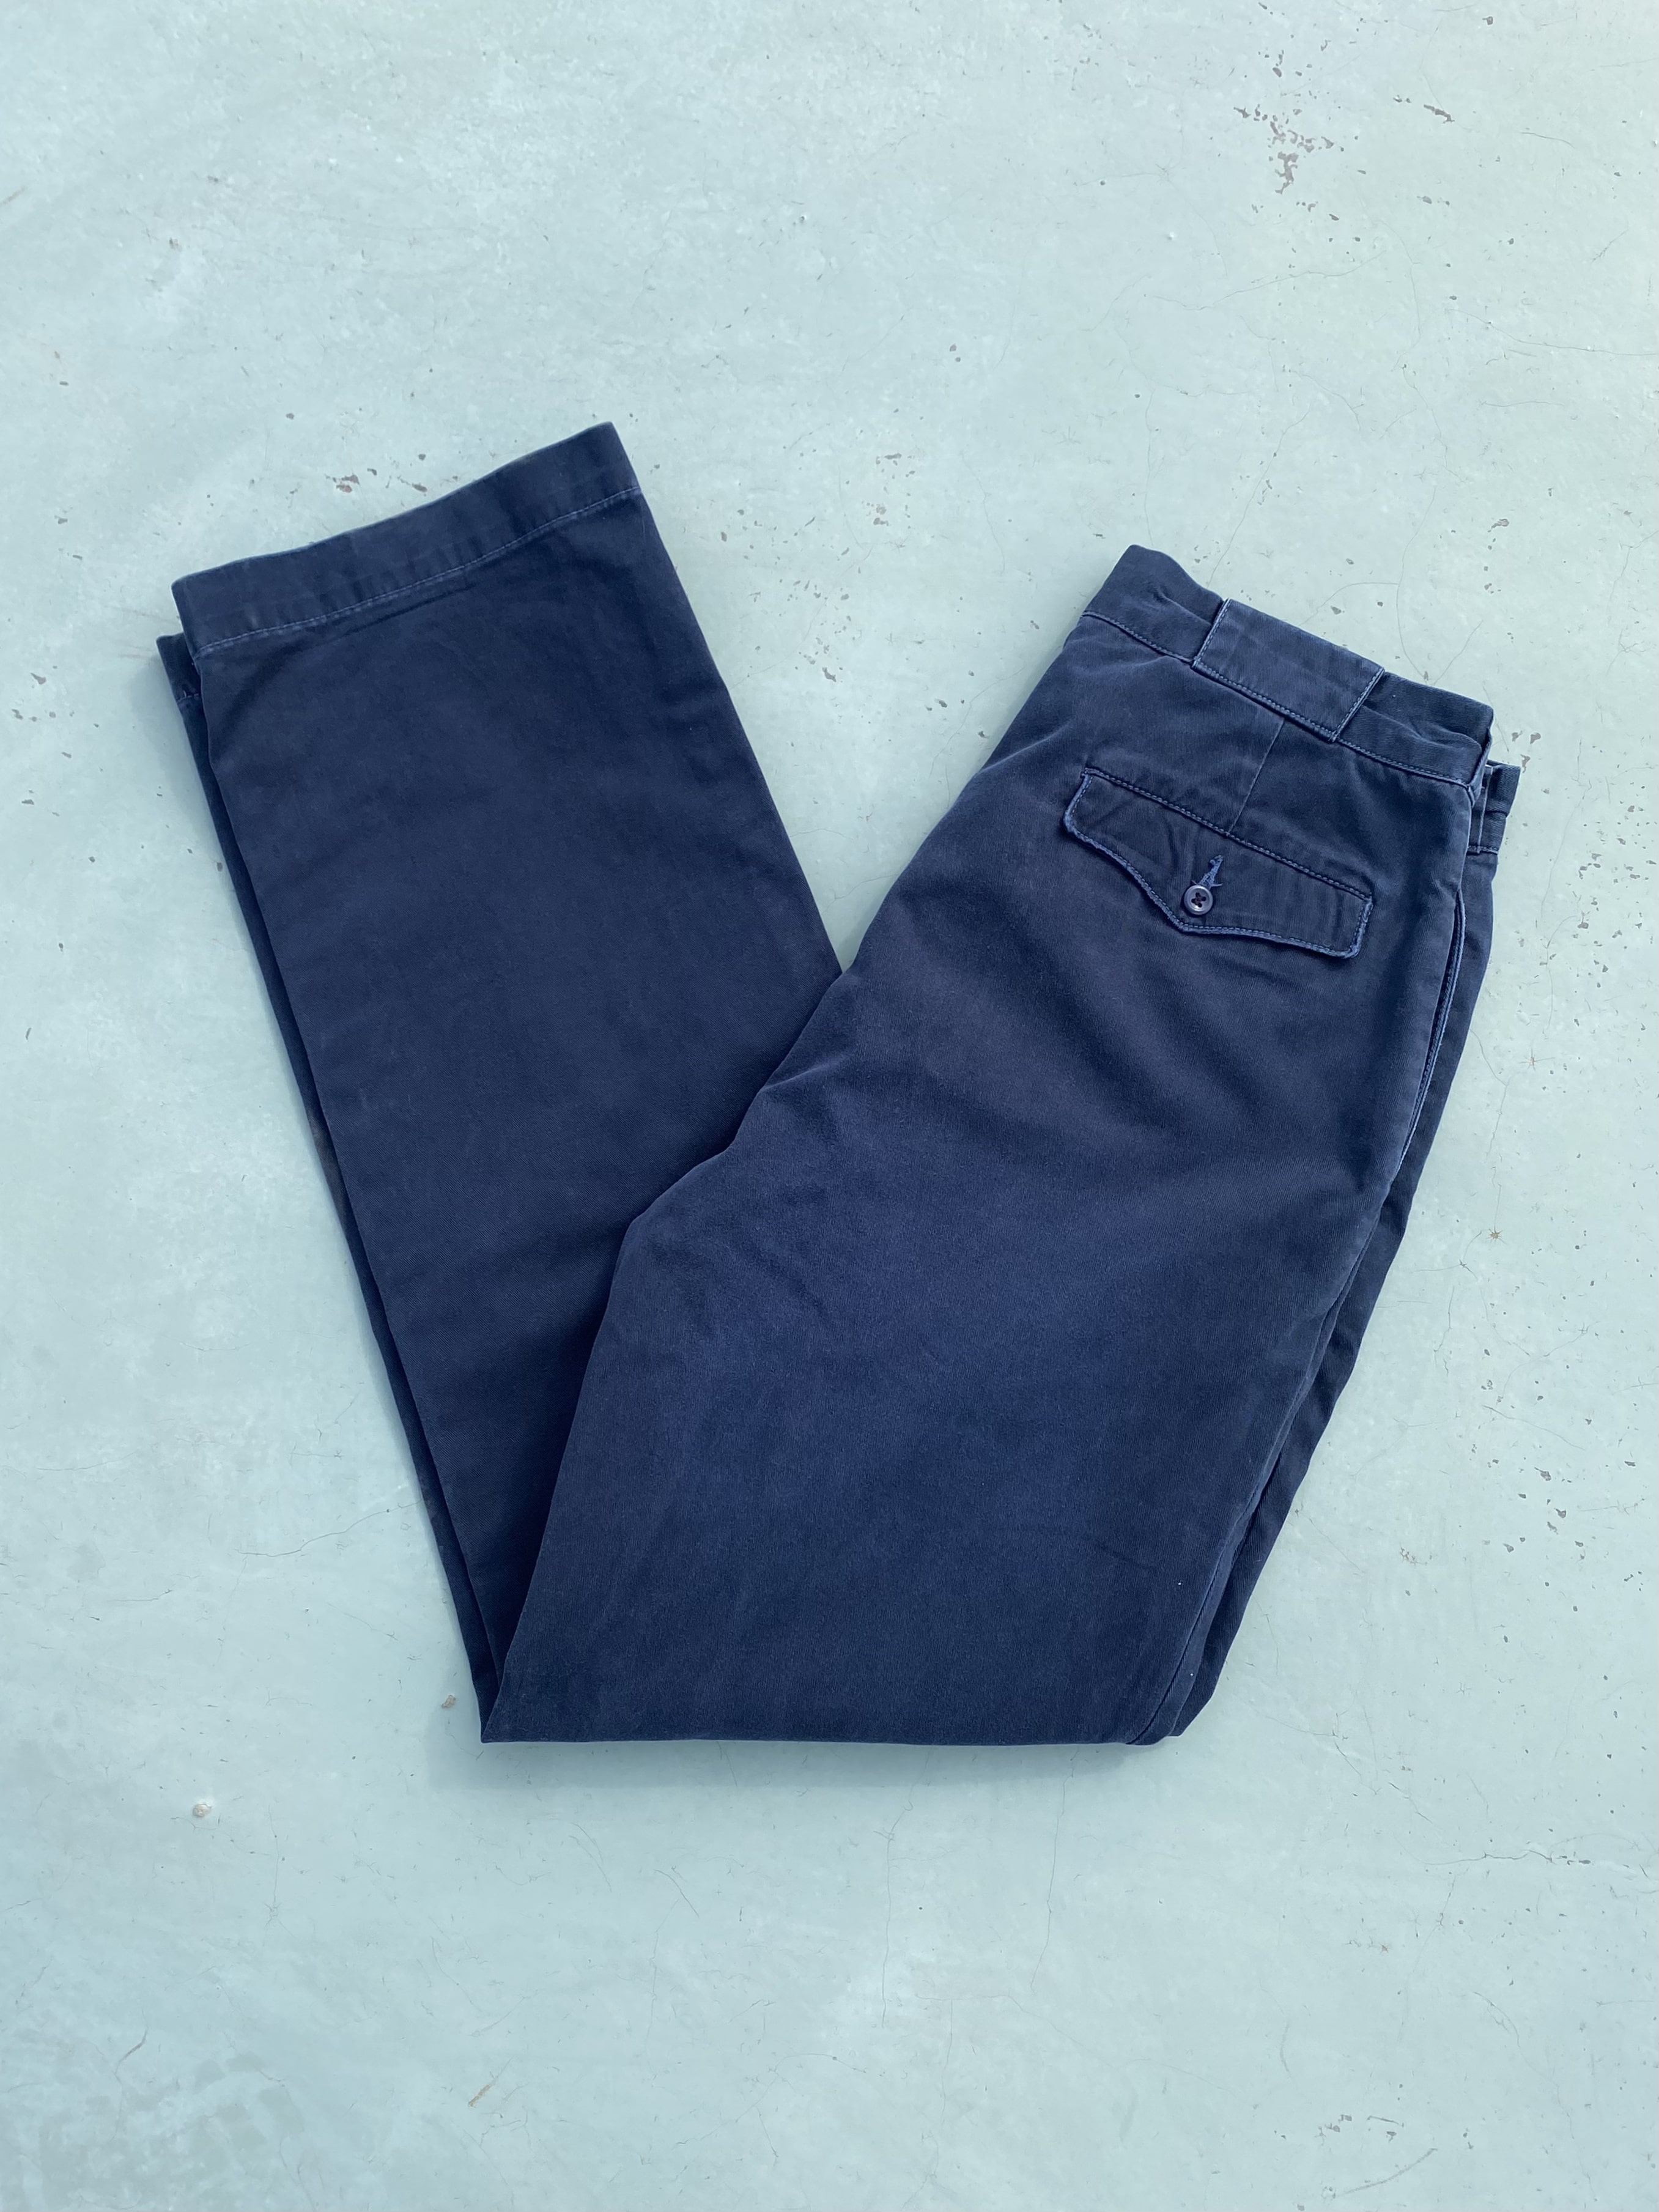 Polo Ralph Lauren Navy Cotton Twill Pants 33 Size - 체리피커